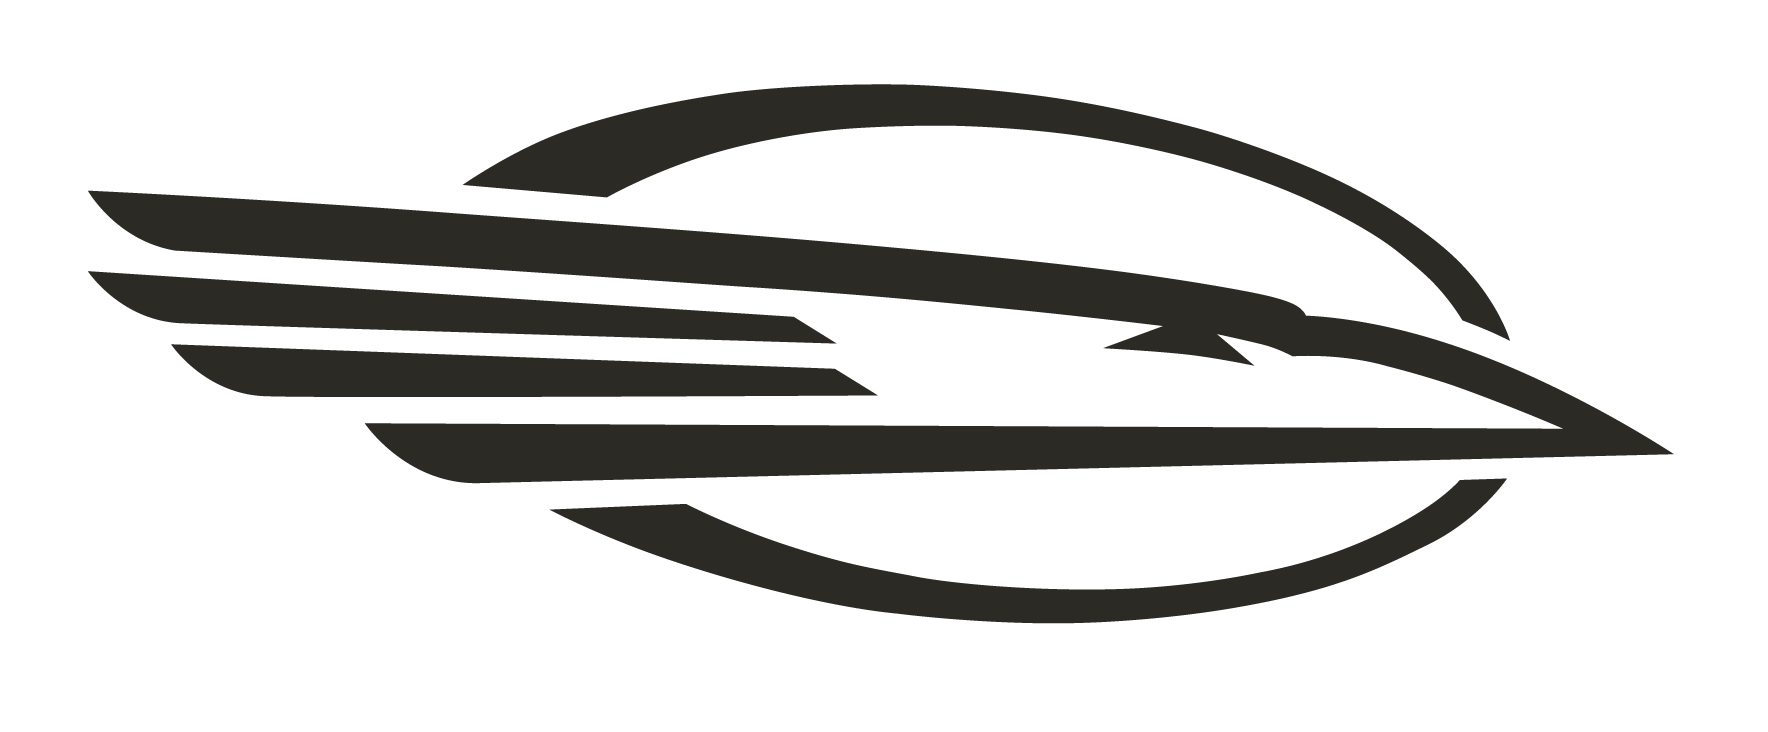 Chaparral brand logo